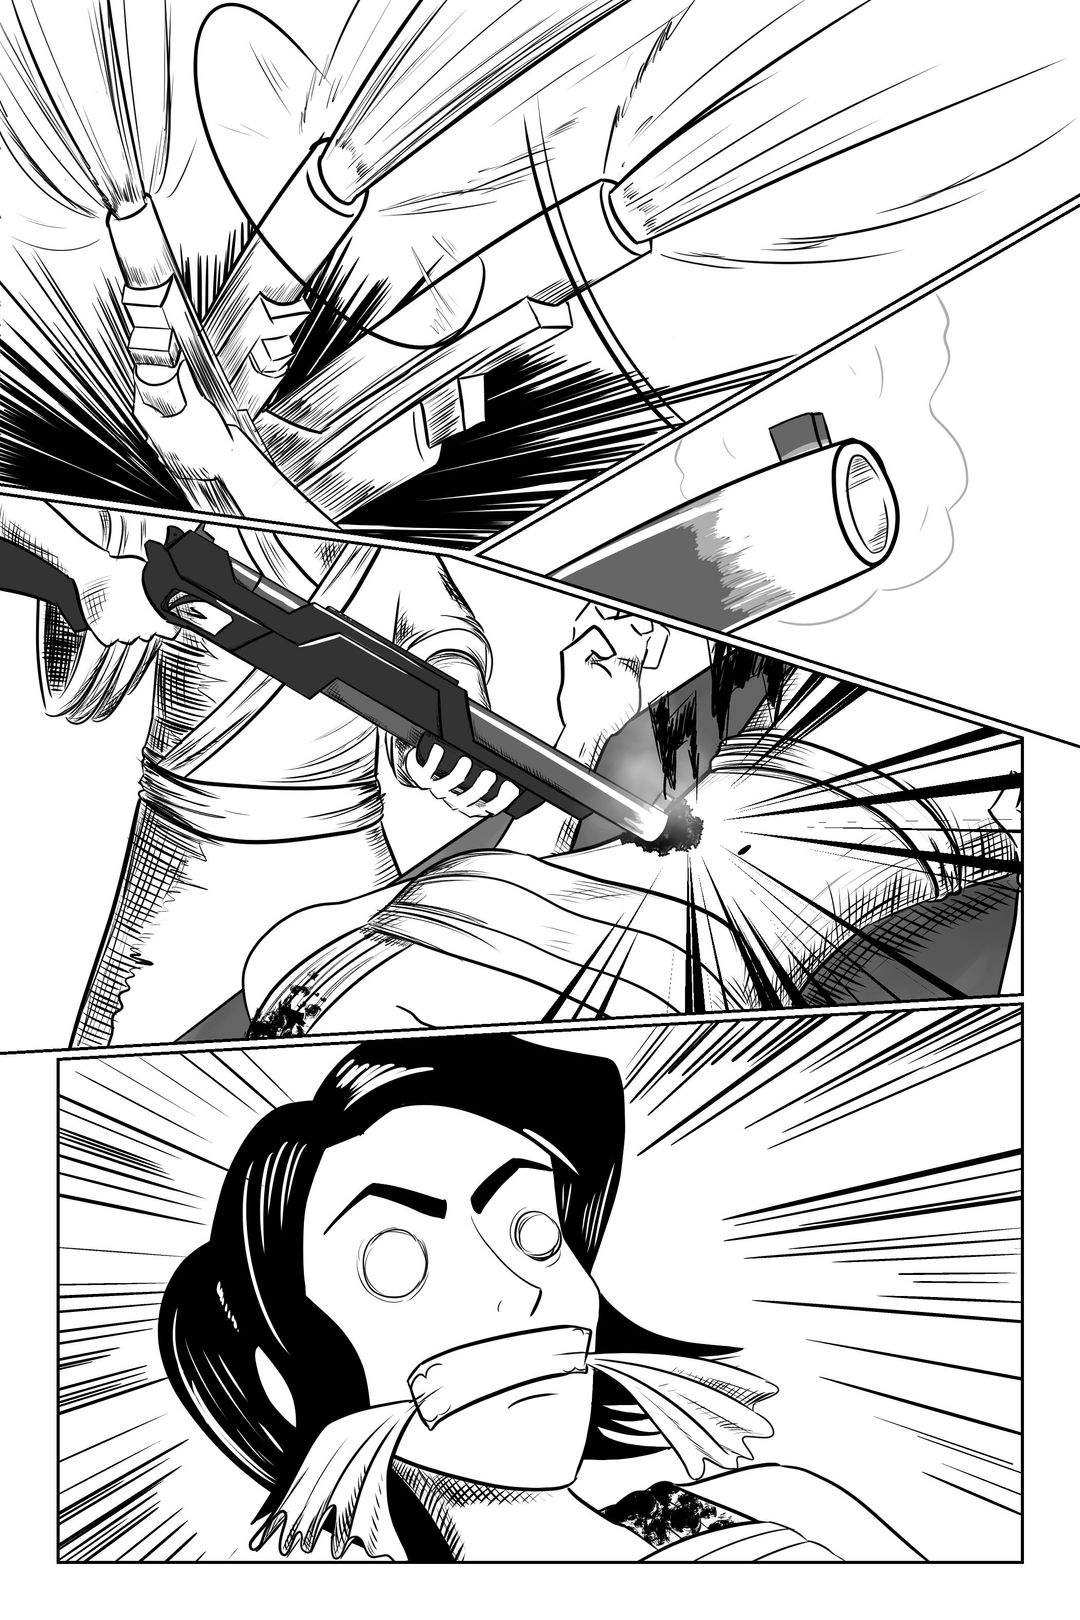 Shotgun Samurai 23 panel 2